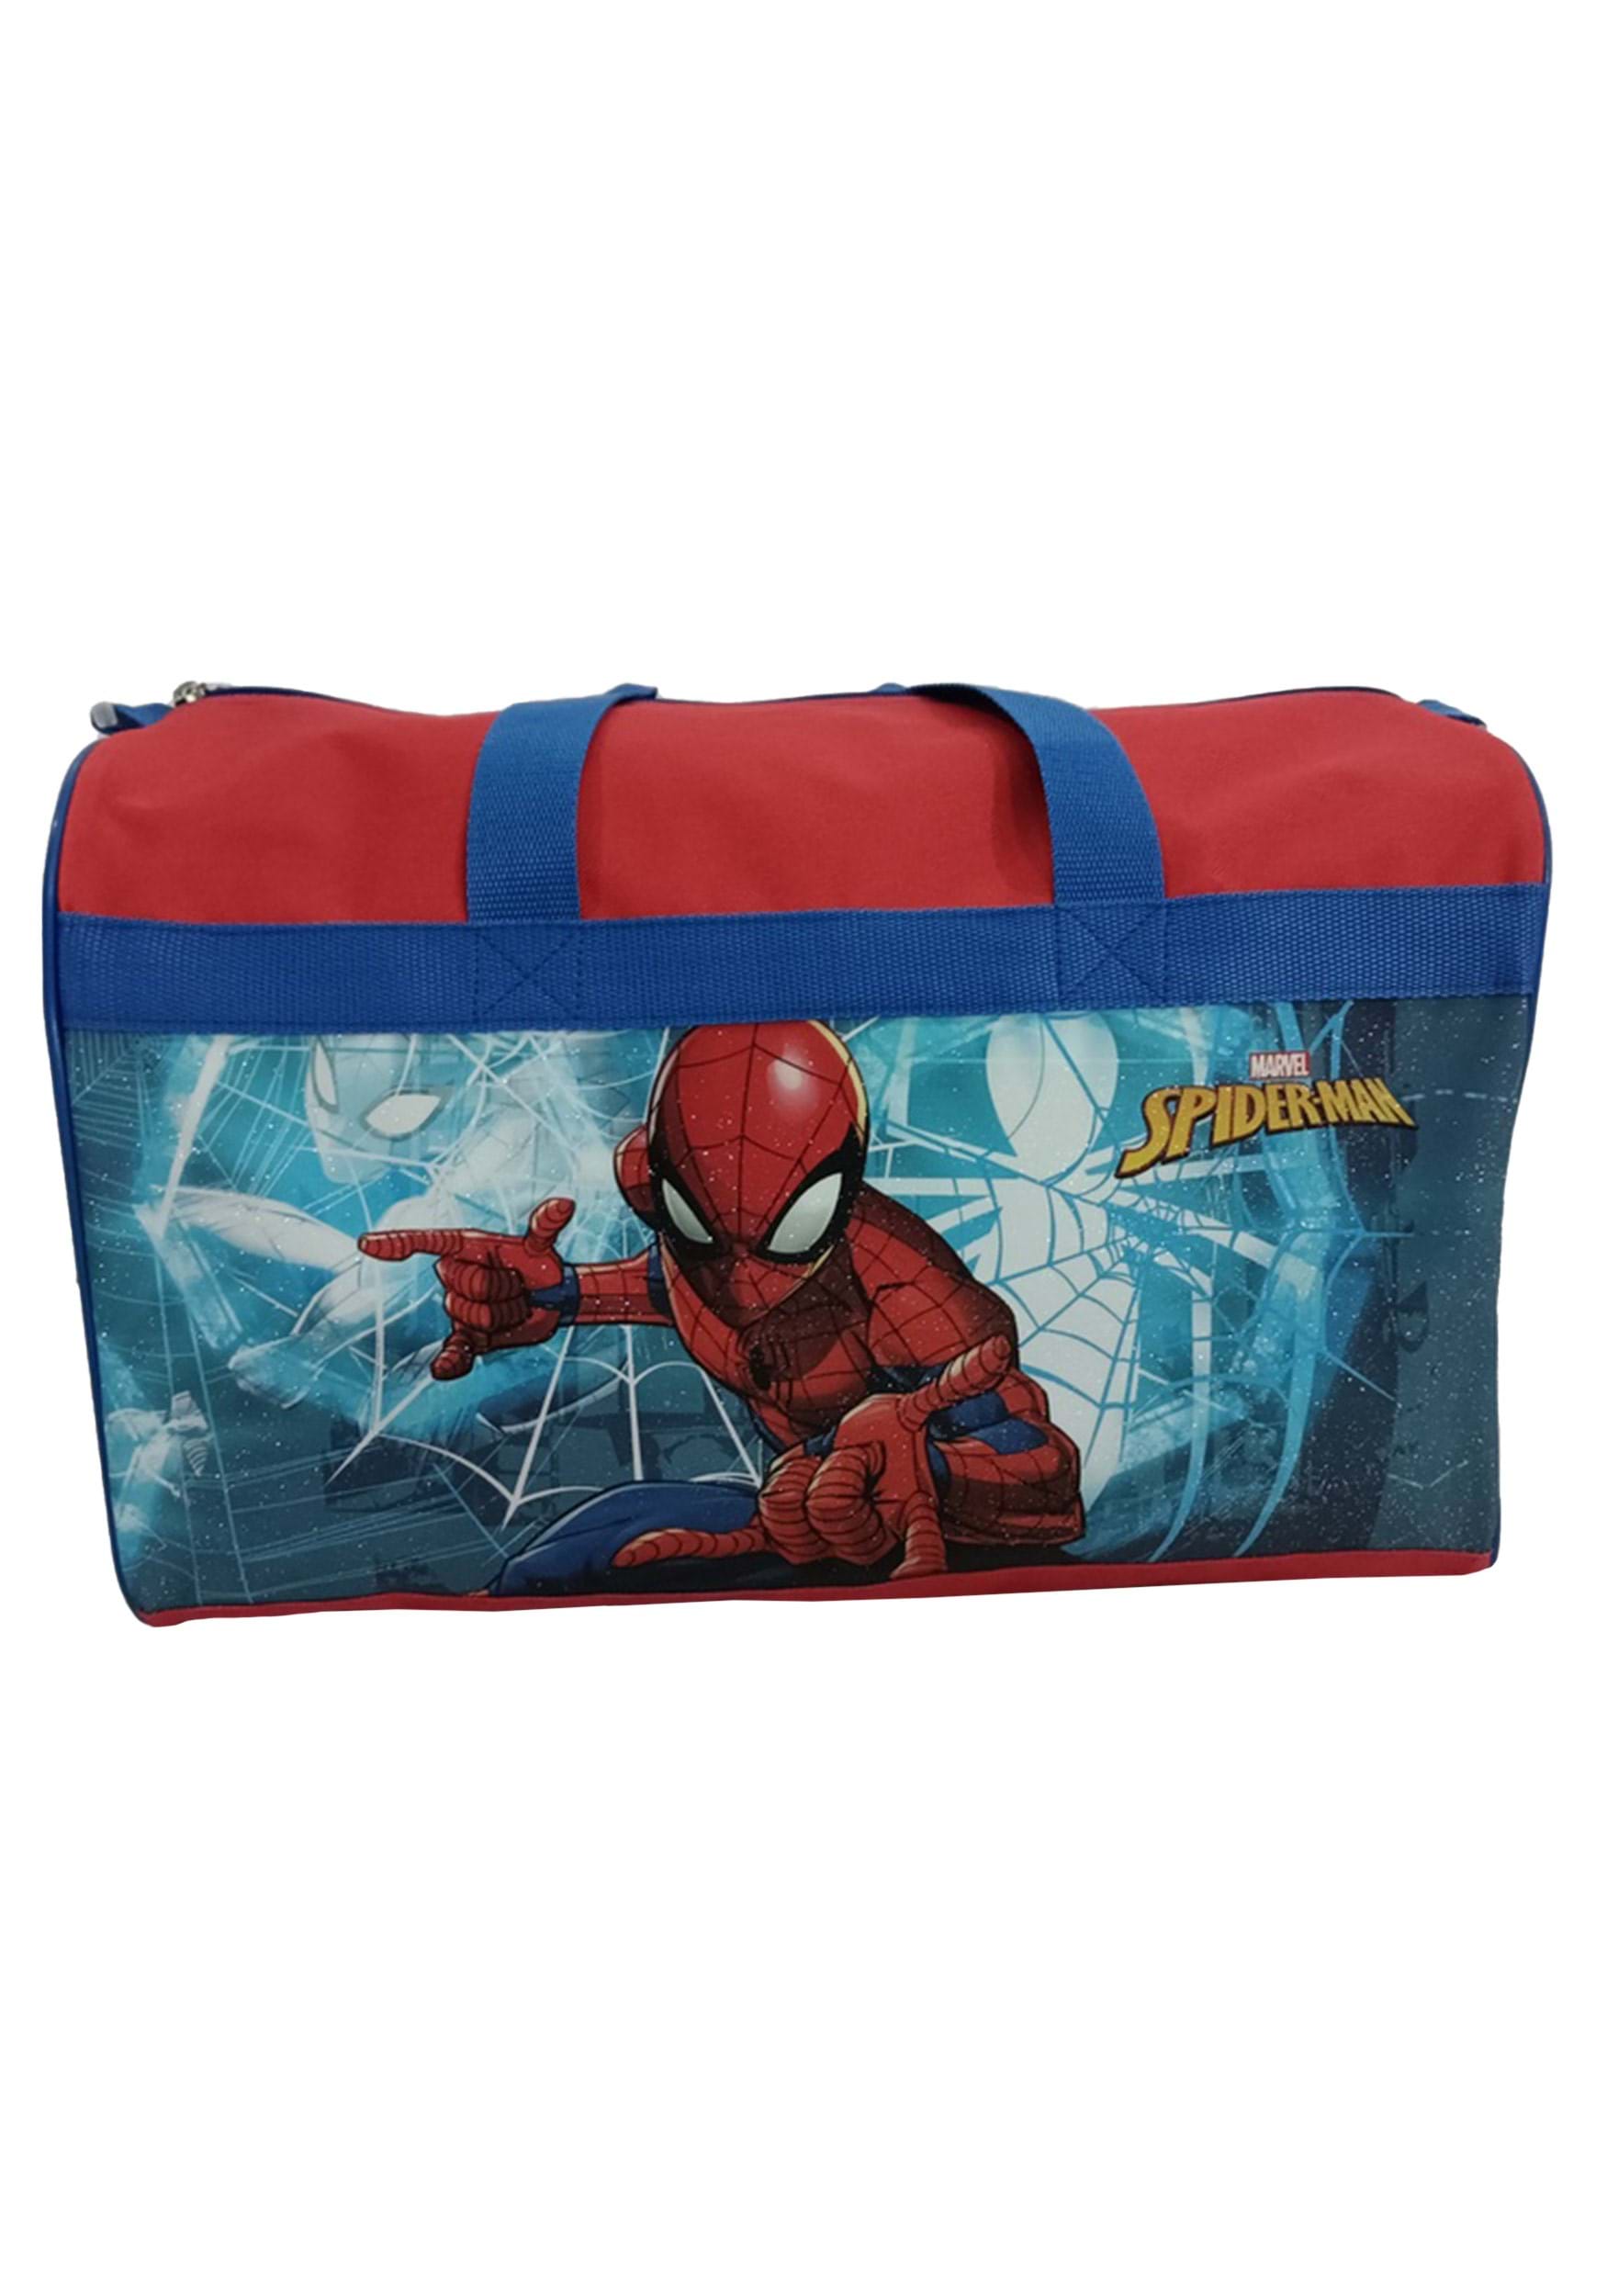 Spider-Man Duffle Bag